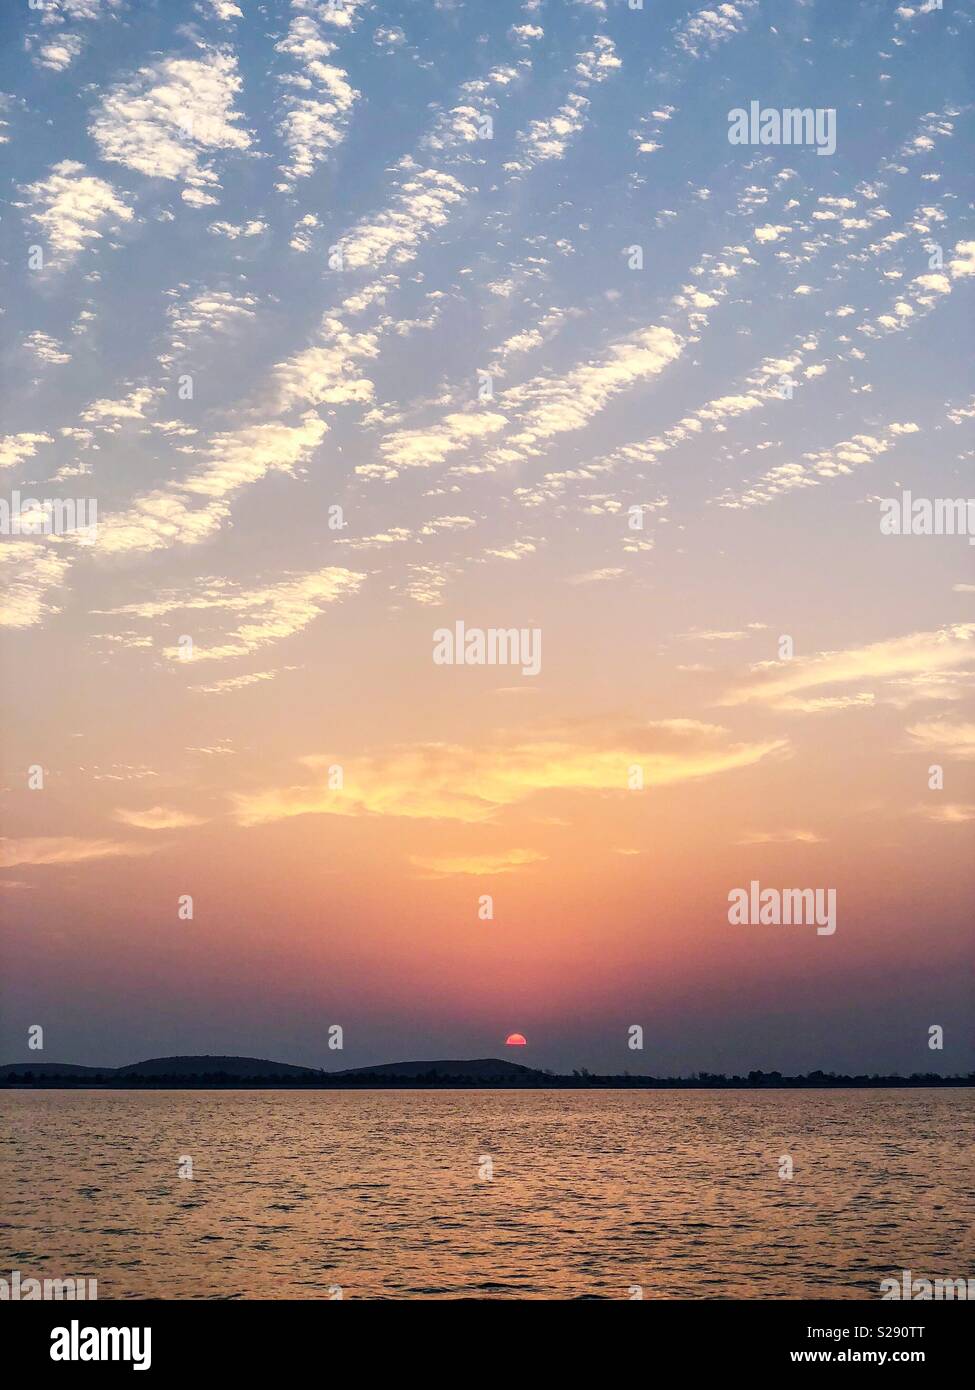 Sunset at Corniche, A peaceful evening in Abu Dhabi, UAE Stock Photo